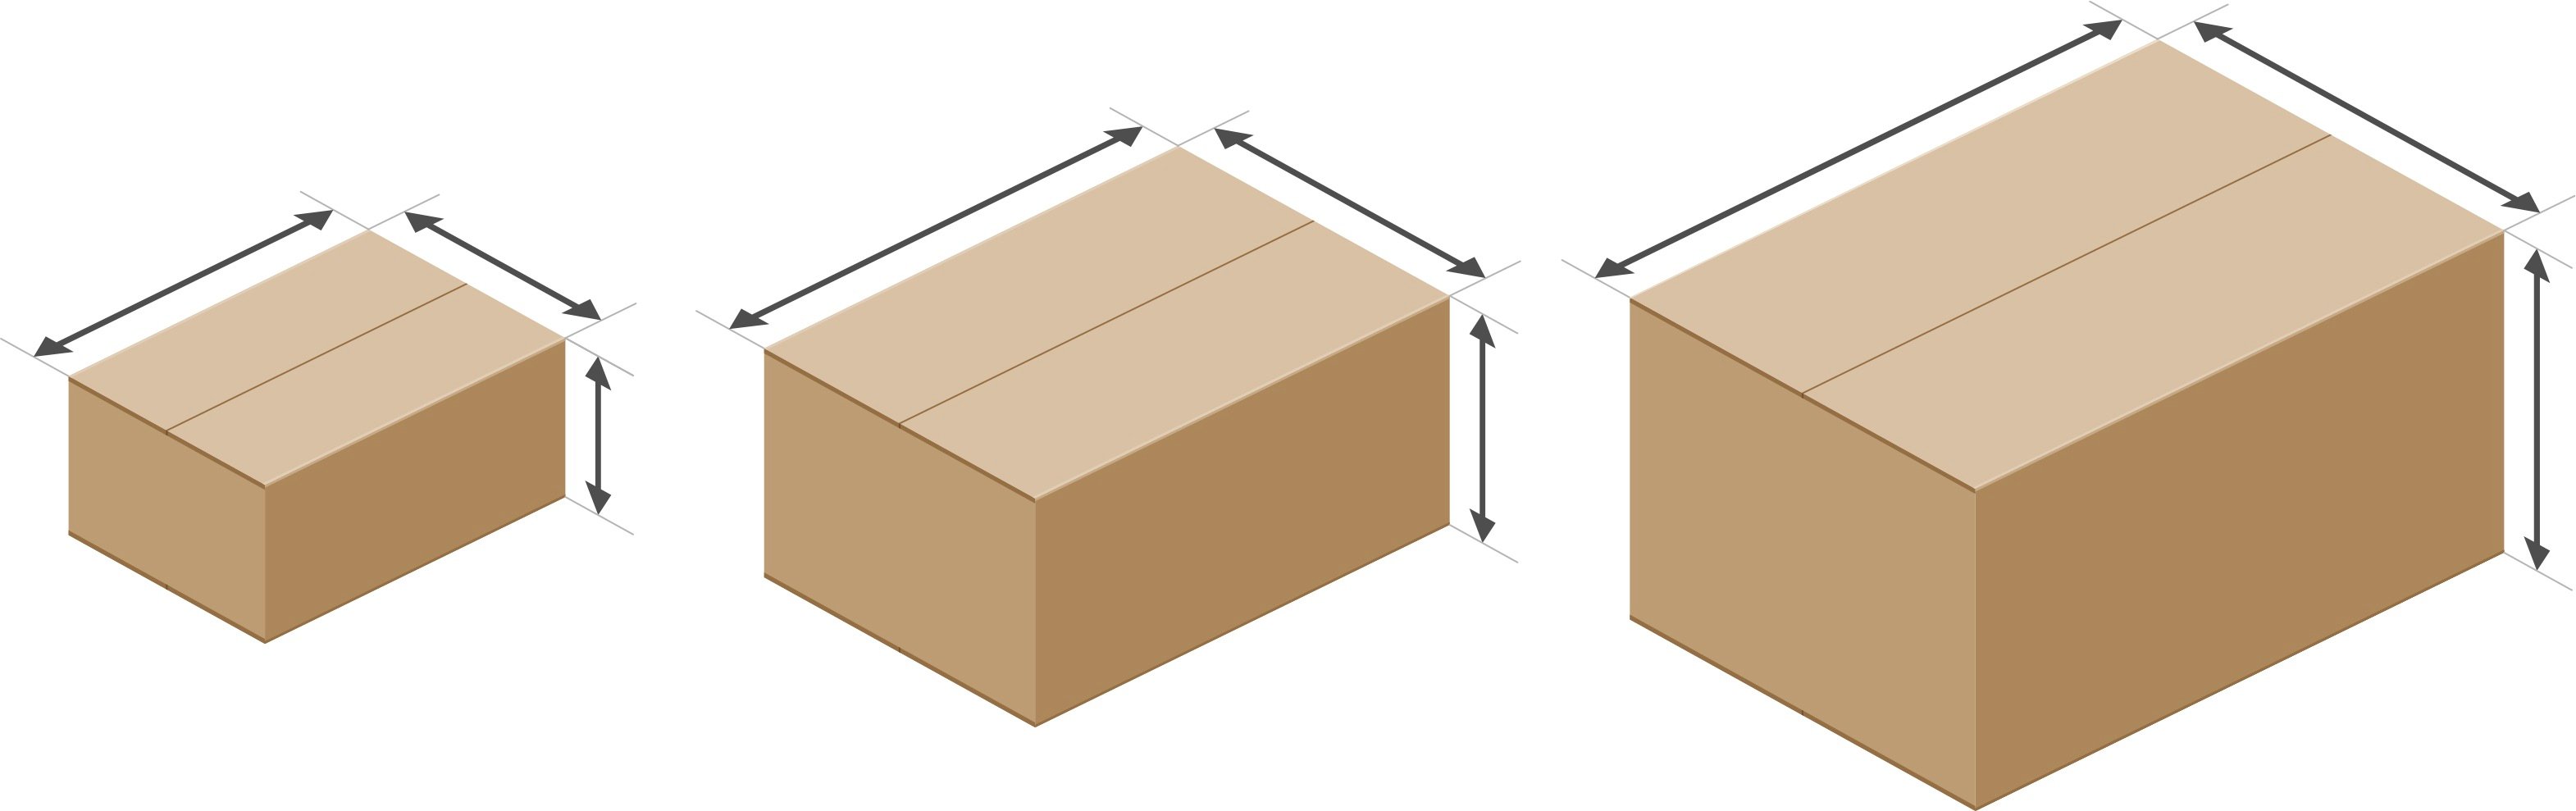 Exterior Dimensions of Box